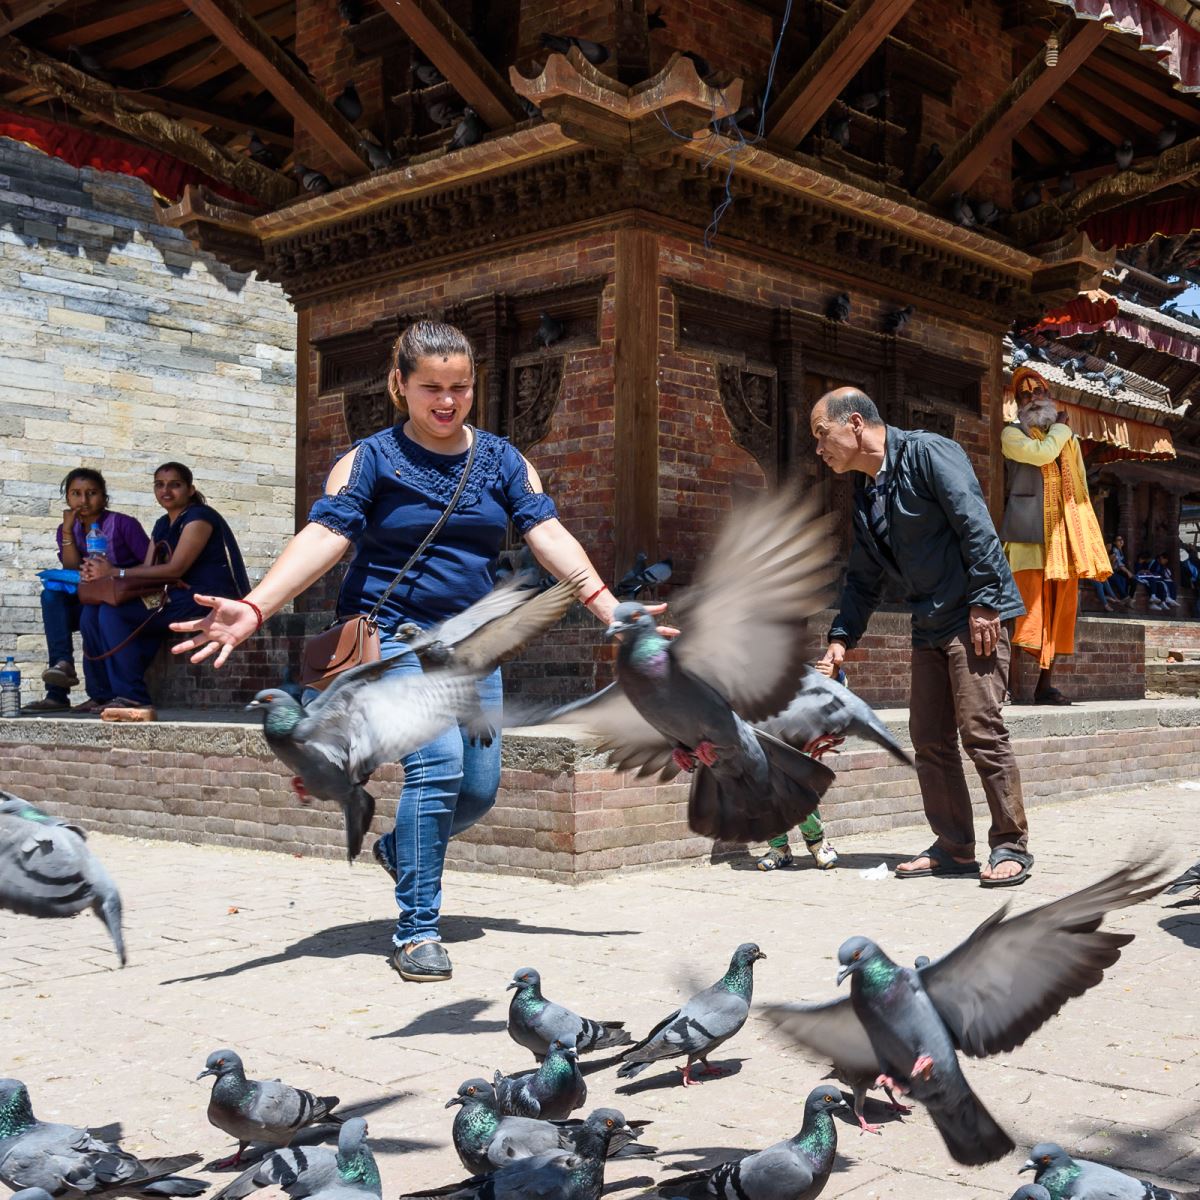 chasing pigeons